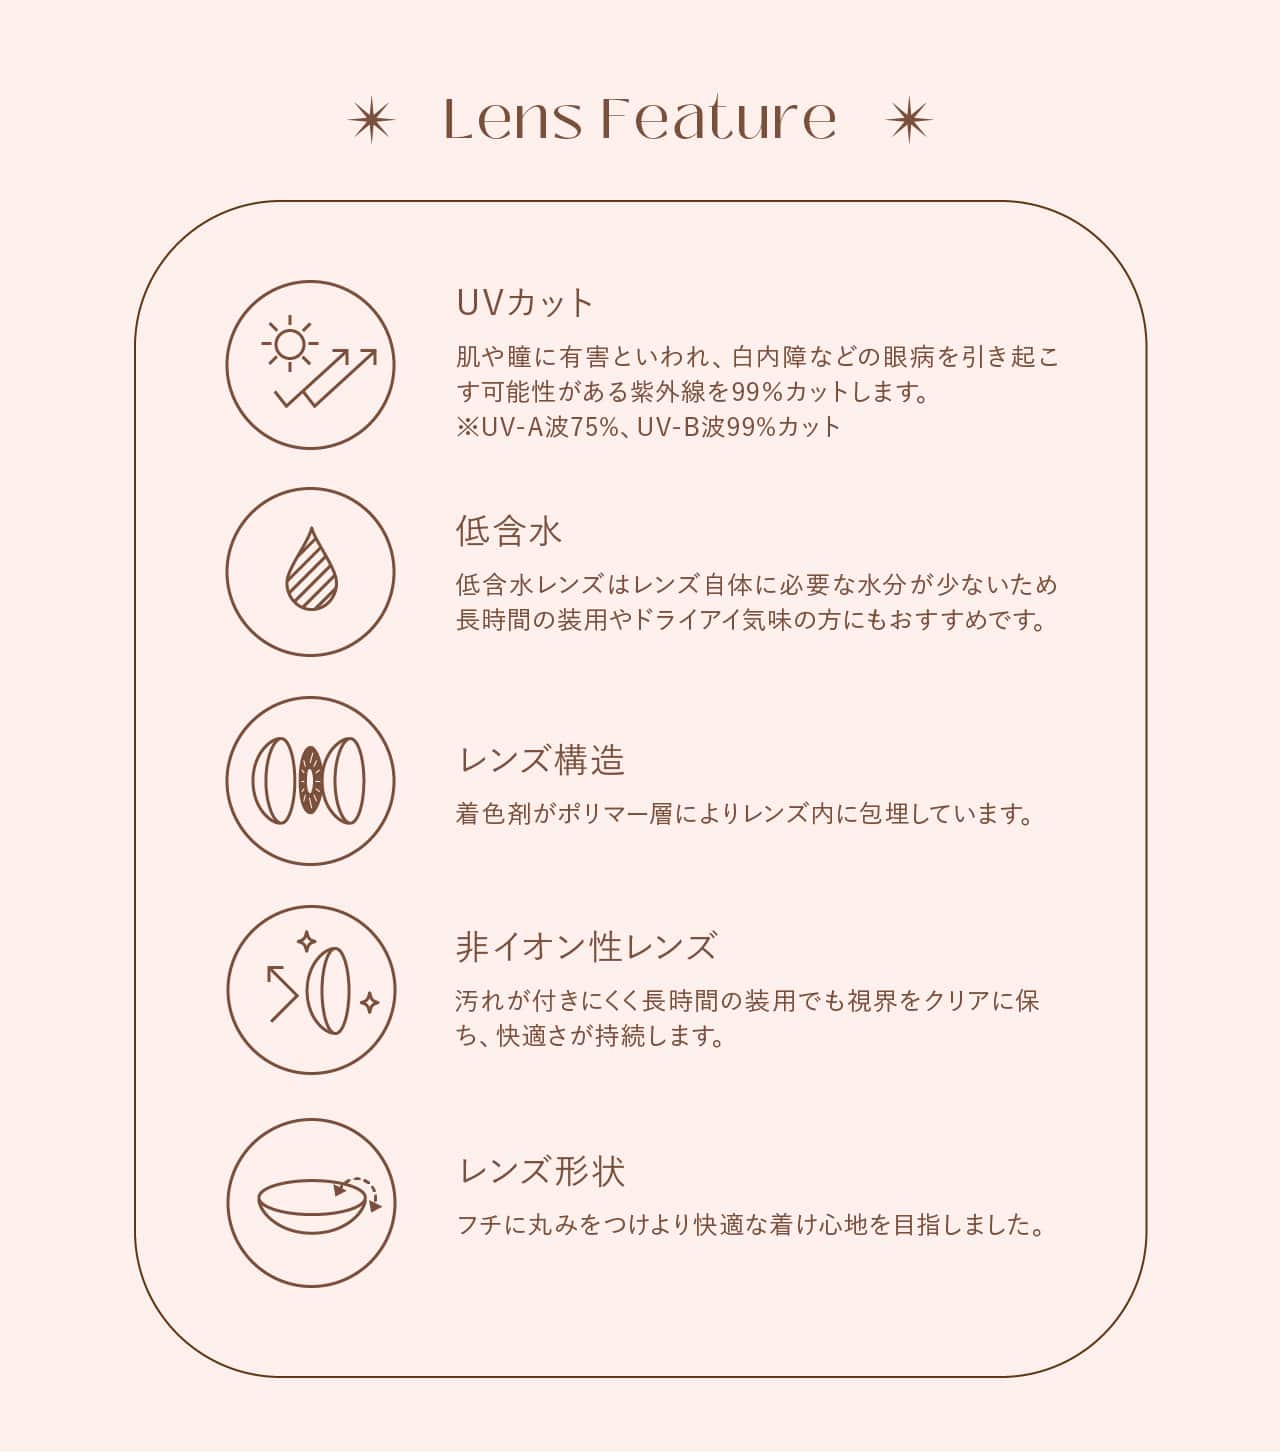 Lens Feature